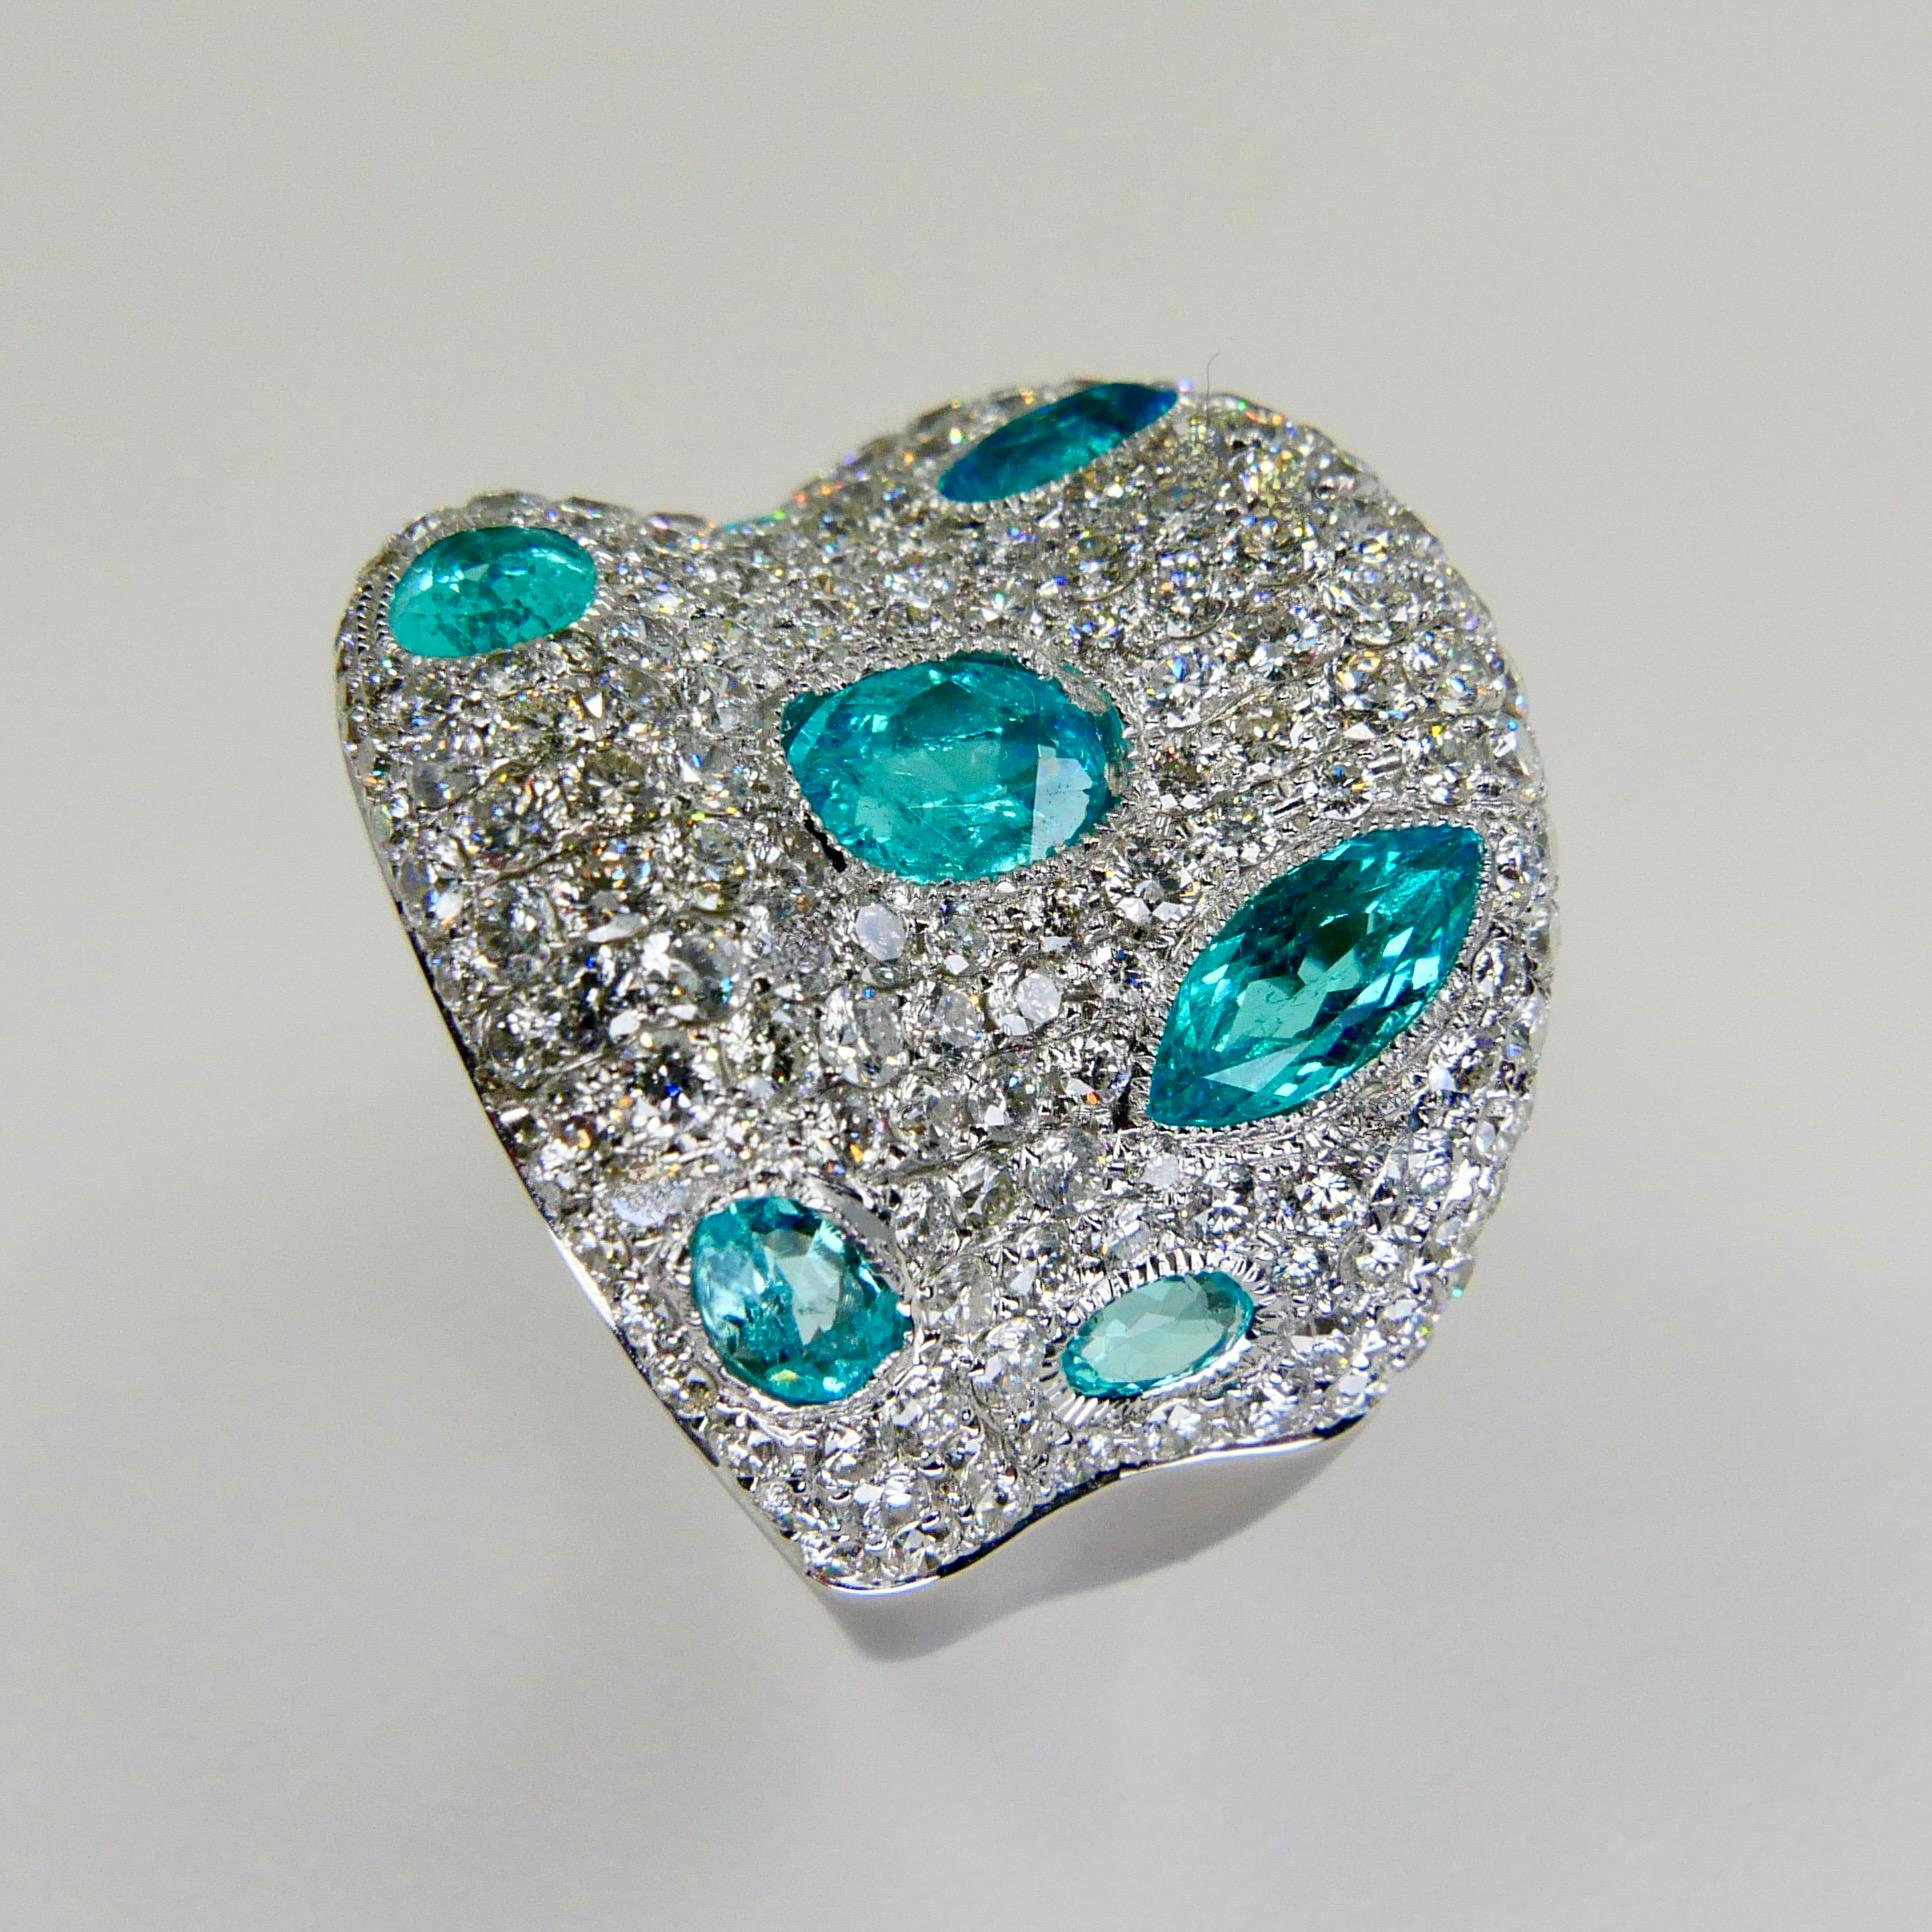 Contemporary Fancy Modern Neon Blue Paraiba Tourmaline Diamond Cocktail Ring, Statement Piece